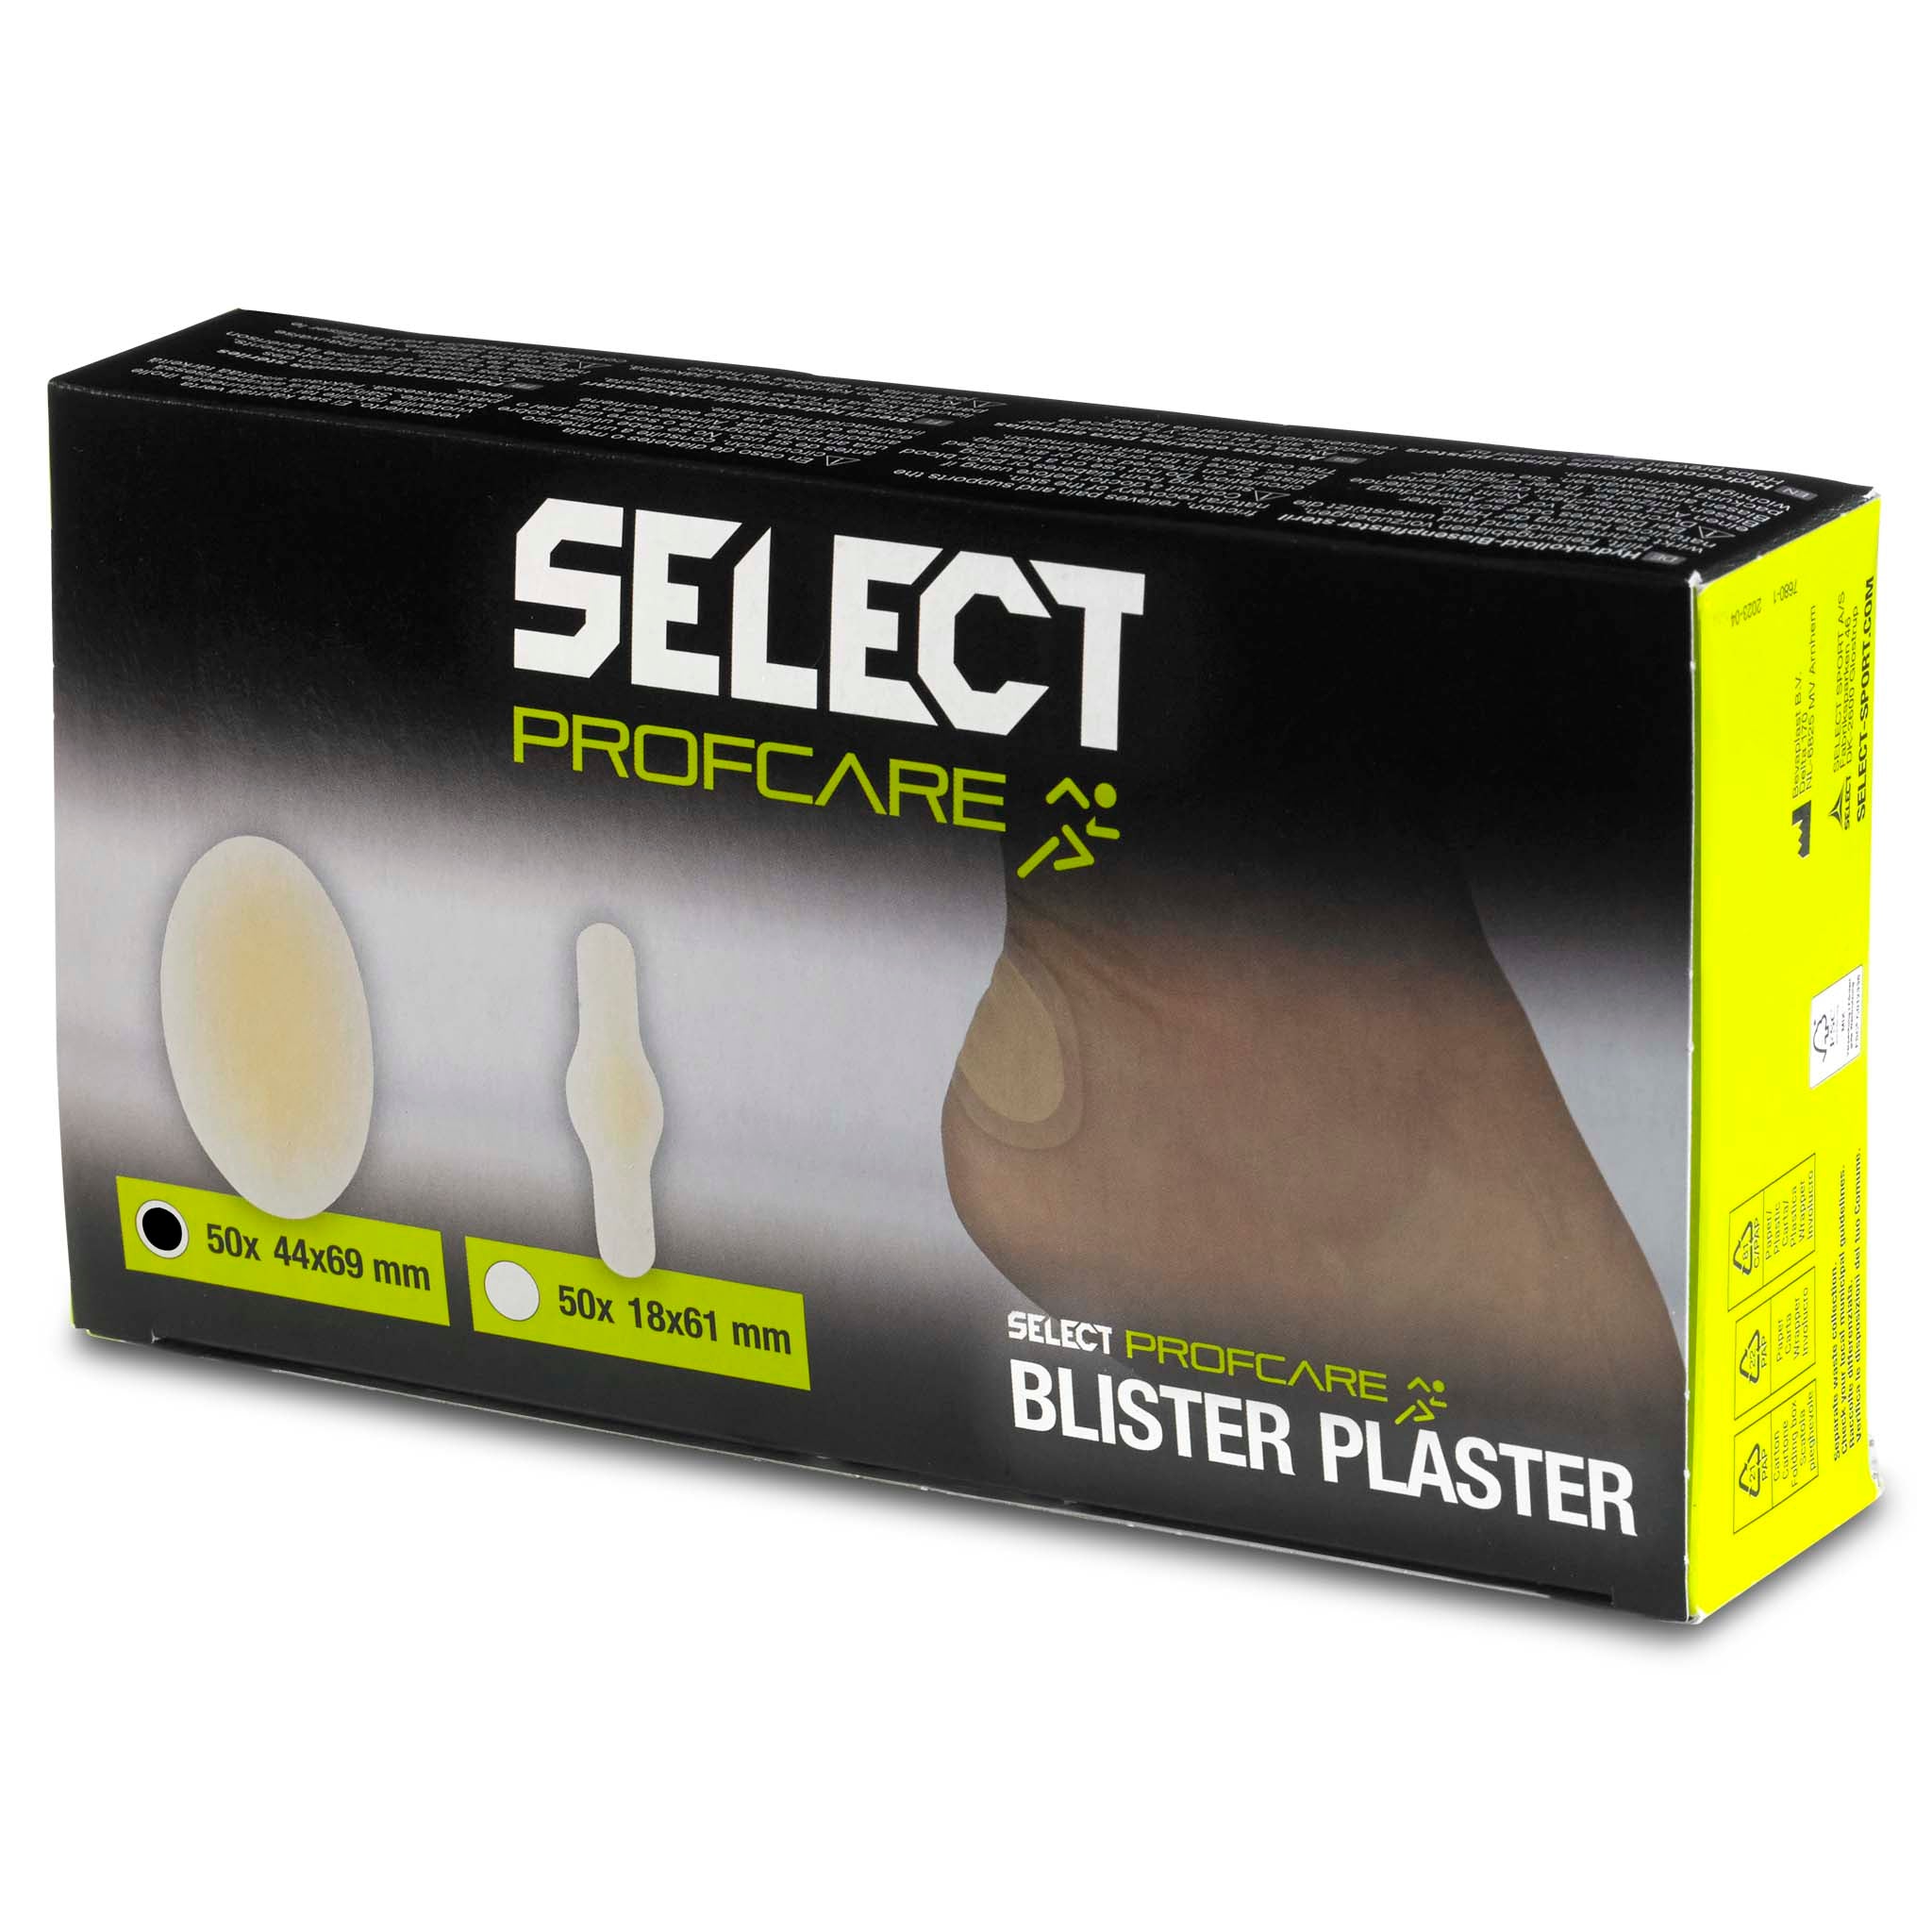 Blister plaster (medium)